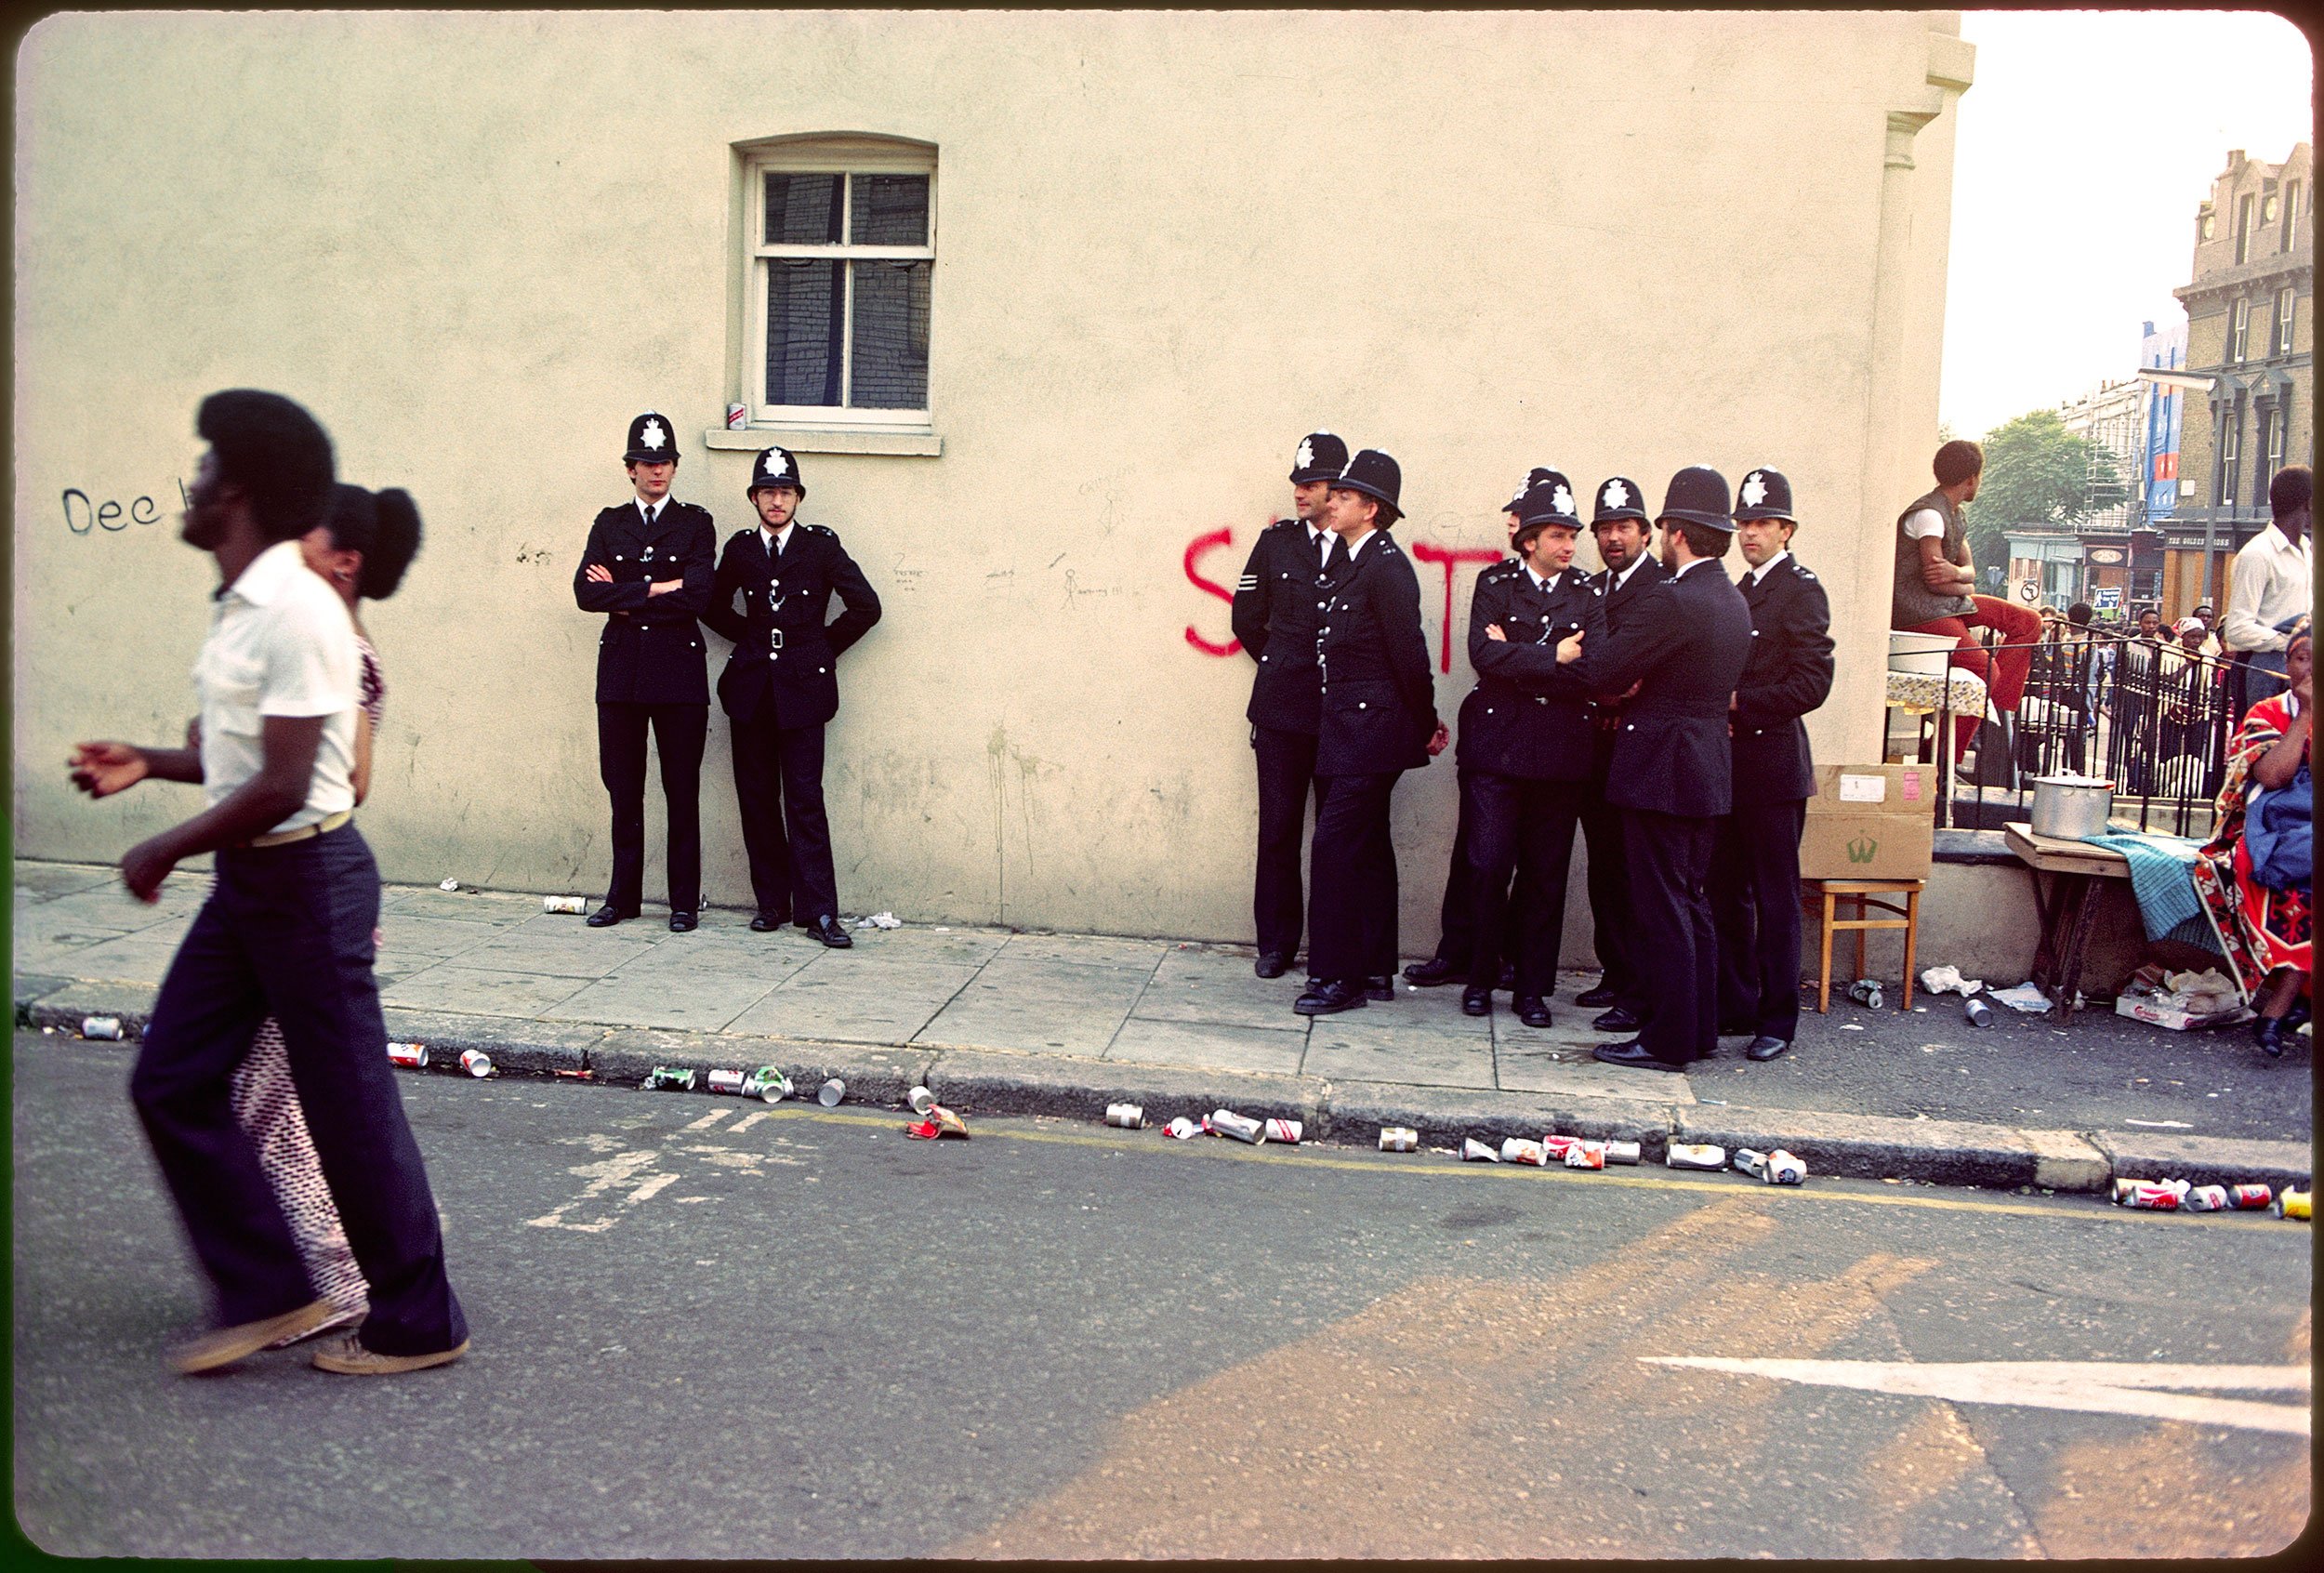 notting hill, london 1980